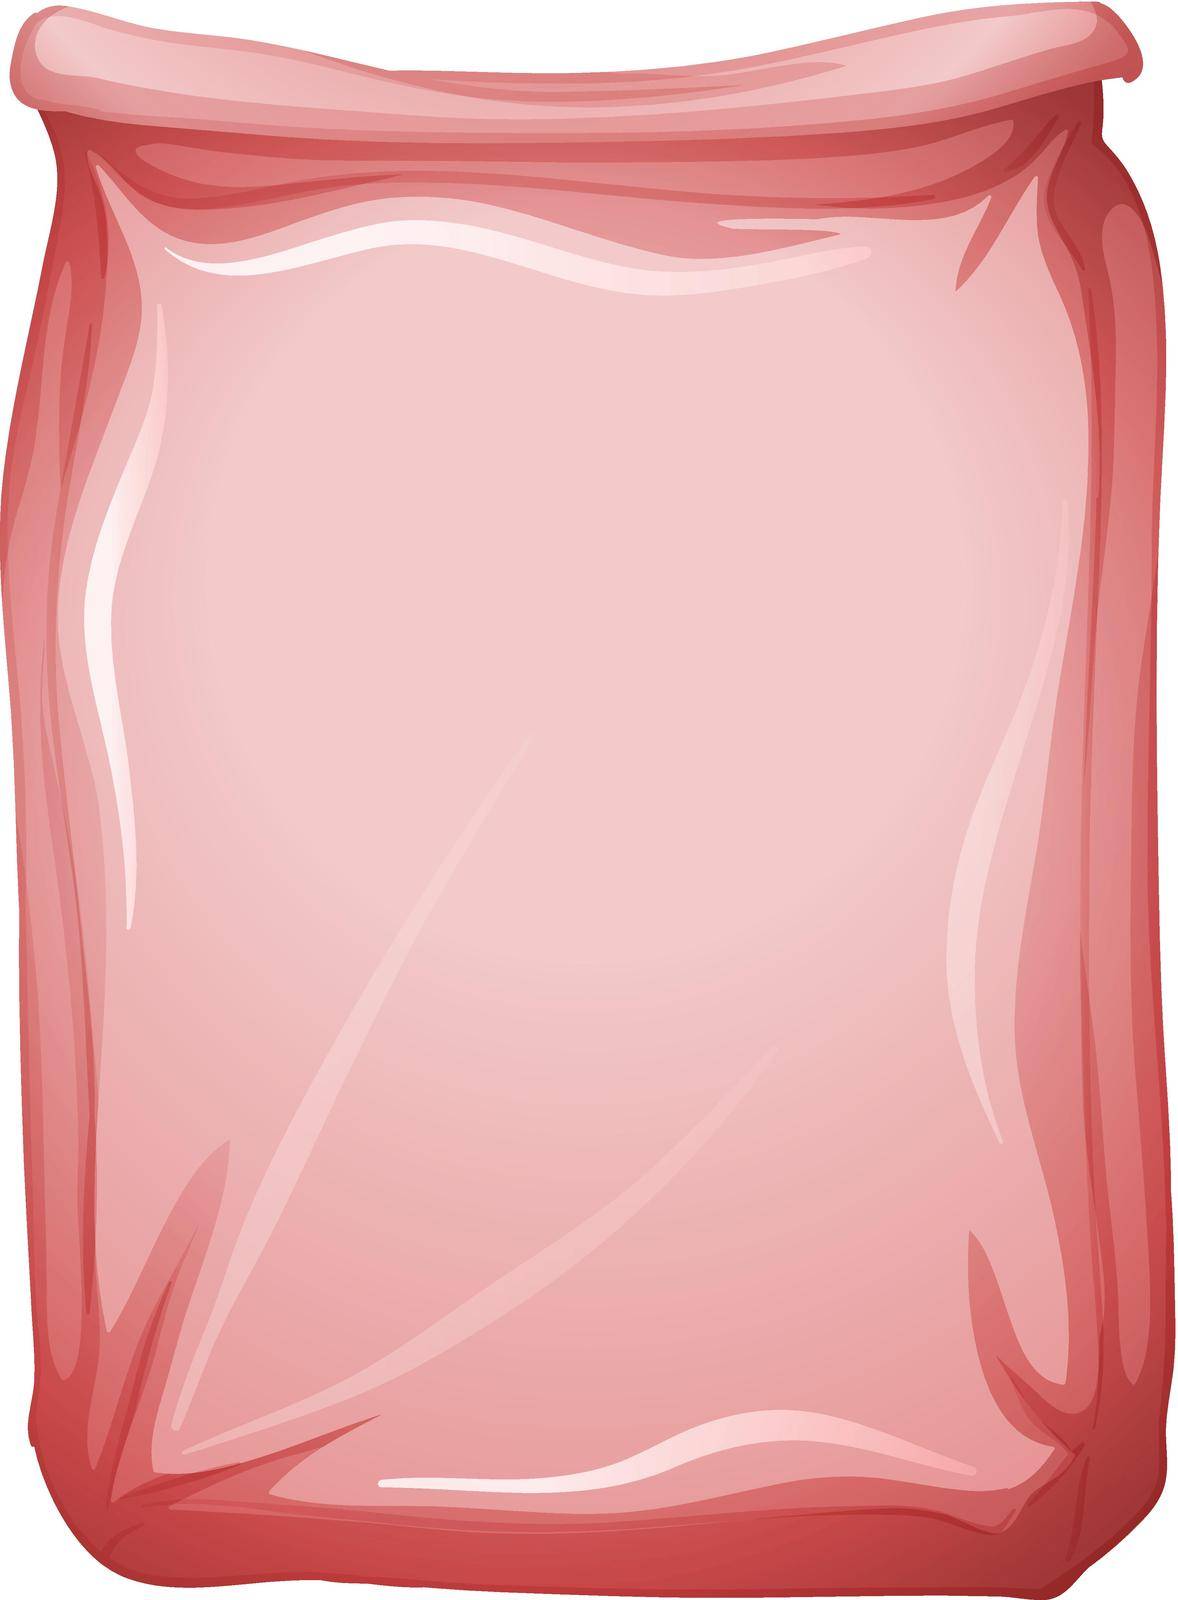 A pink bag by iimages